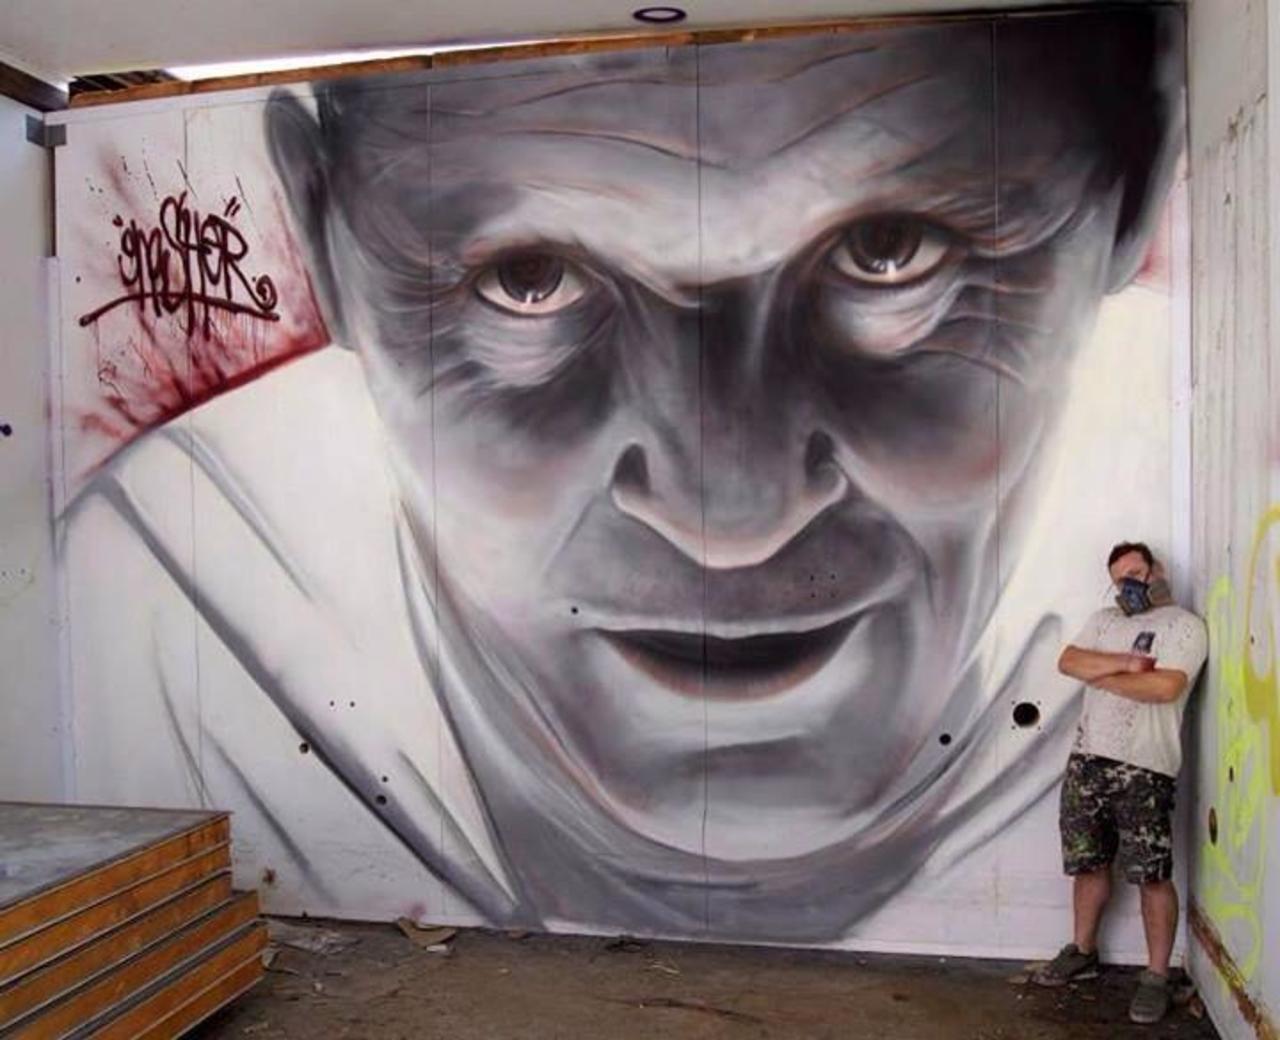 “@GoogleStreetArt: Artist @GnasherMurals Street Art portrait of Hannibal Lector 

#art #graffiti #mural #streetart http://t.co/xTSBBZUAPV”❤️